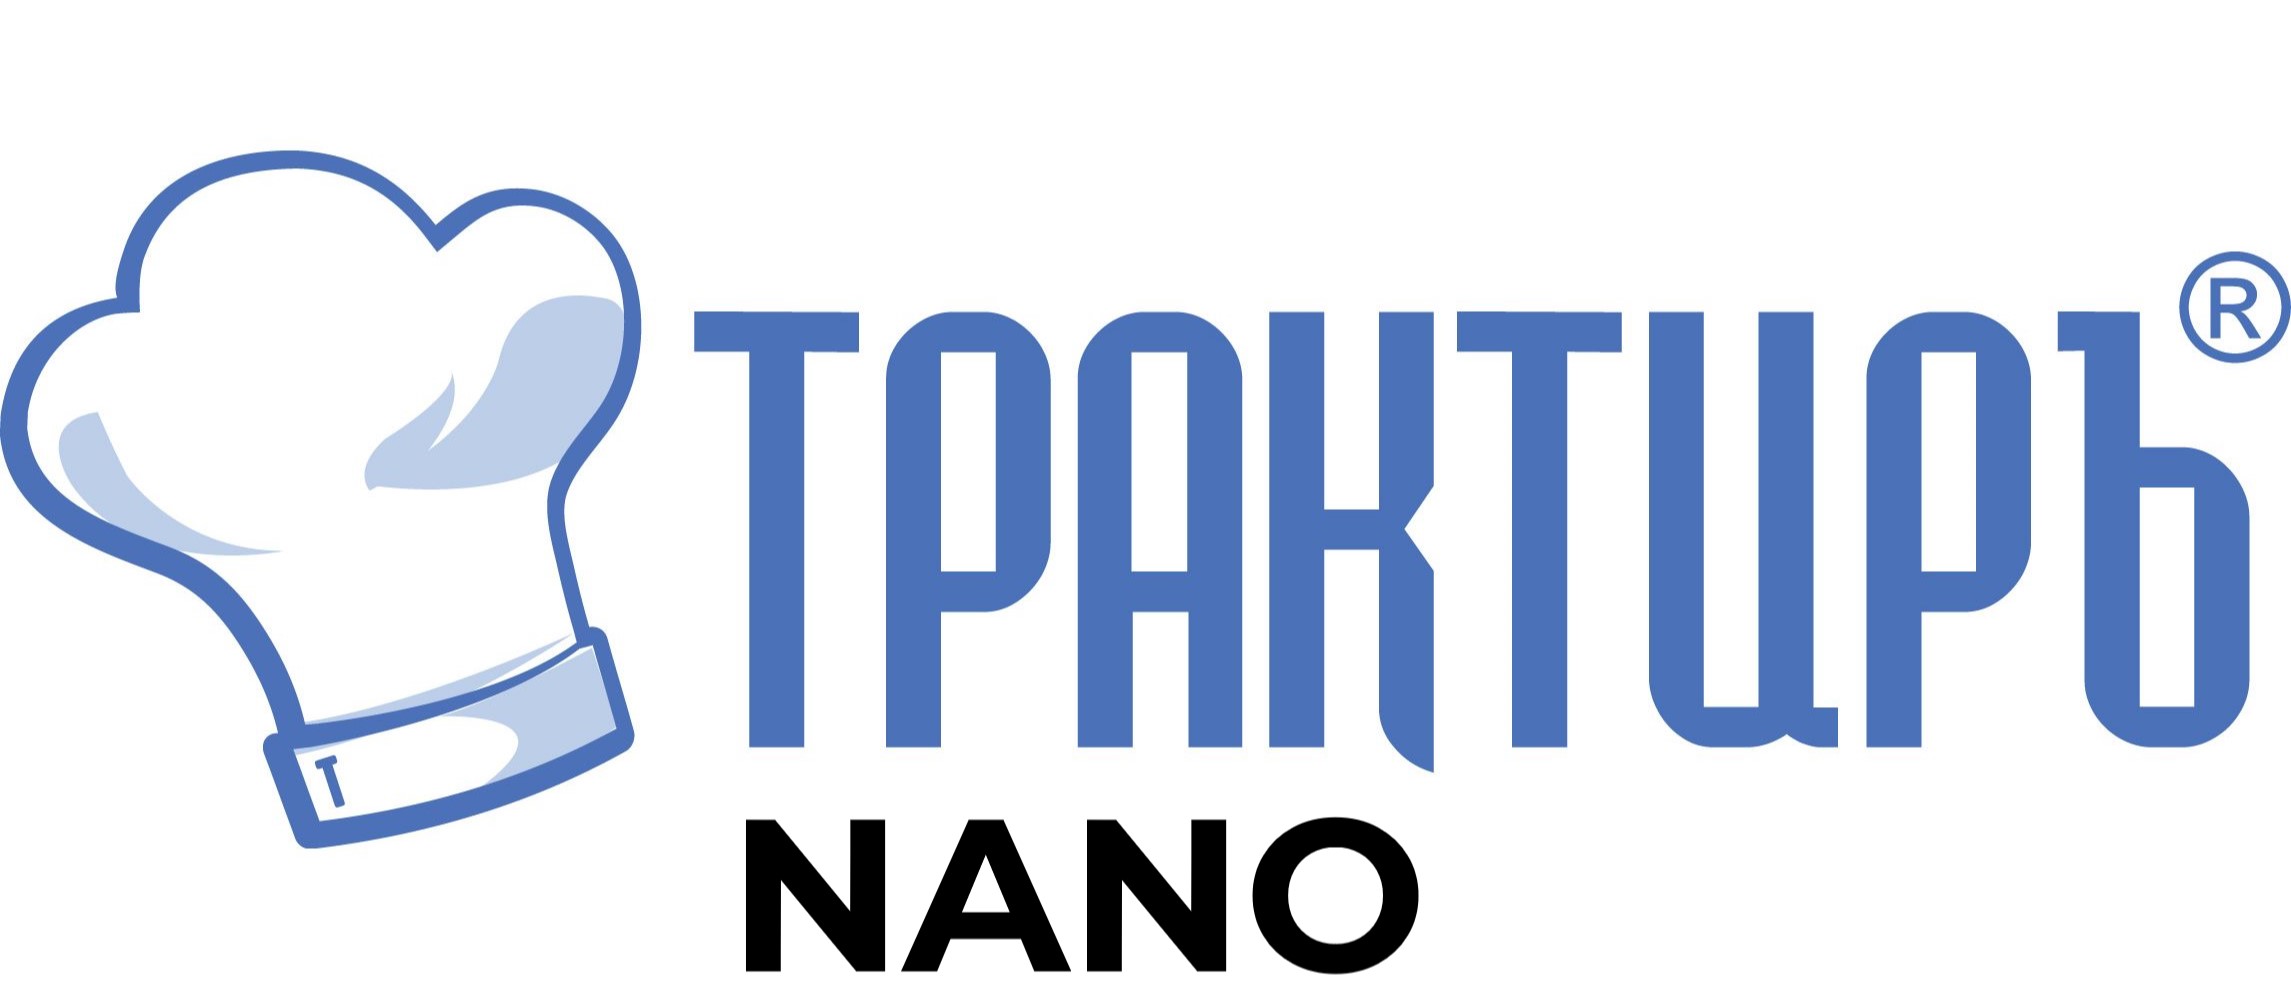 Конфигурация Трактиръ: Nano (Основная поставка) в Нижнем Новгороде